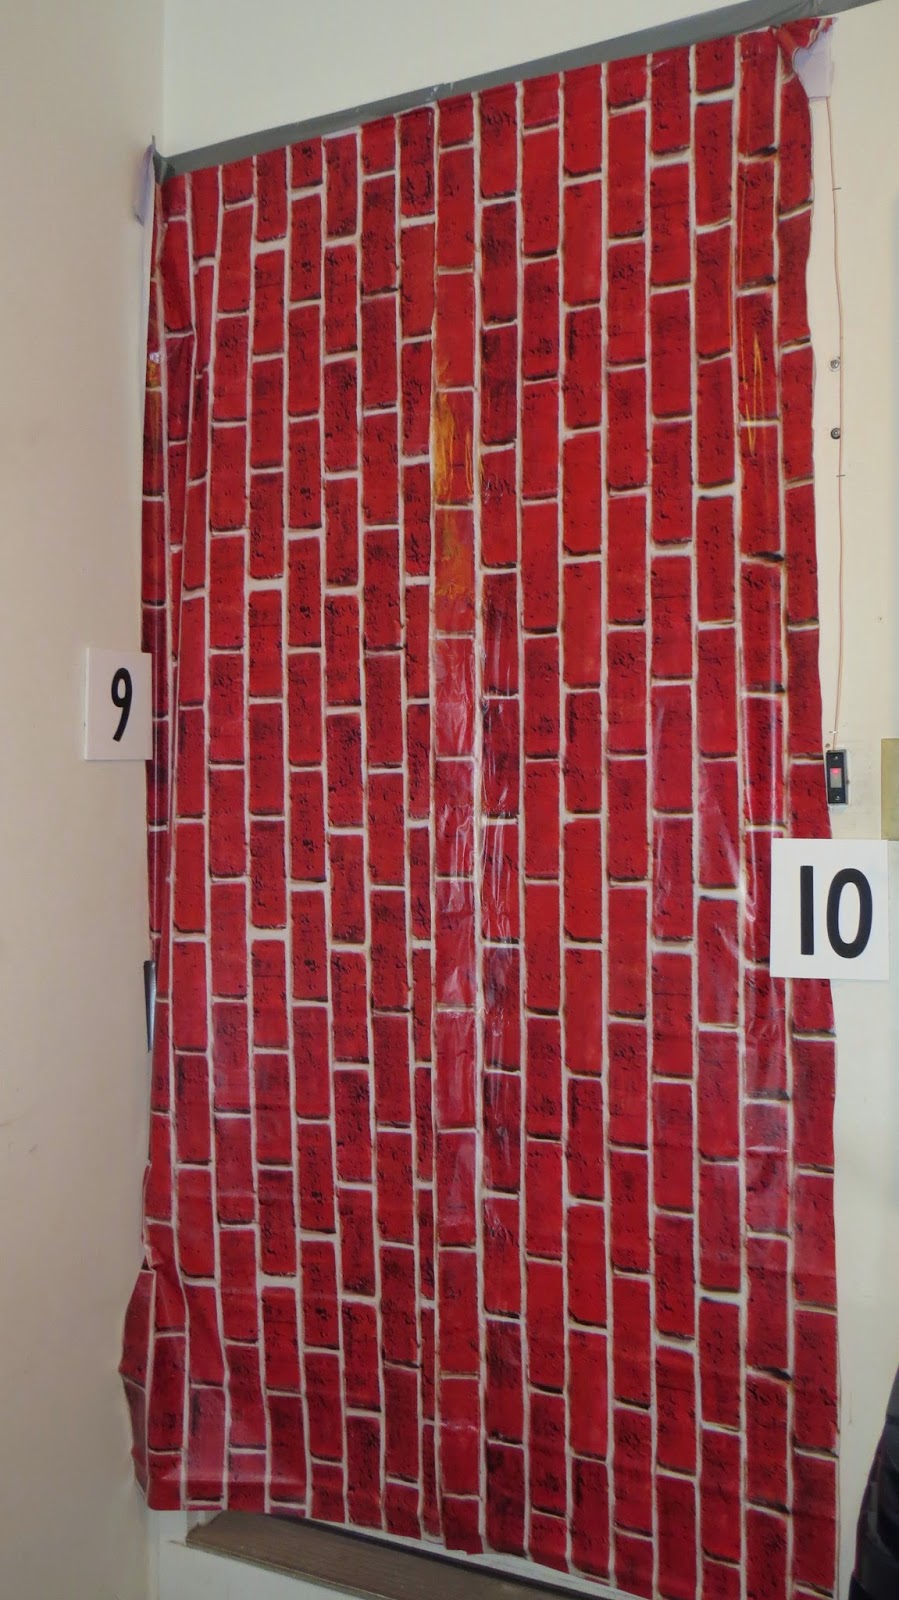 Lierpit Platform 9 and 3/4 of King's Cross Station - Secret Passage to Magic School Decorative Shower Curtain Brick Wall Bathroom